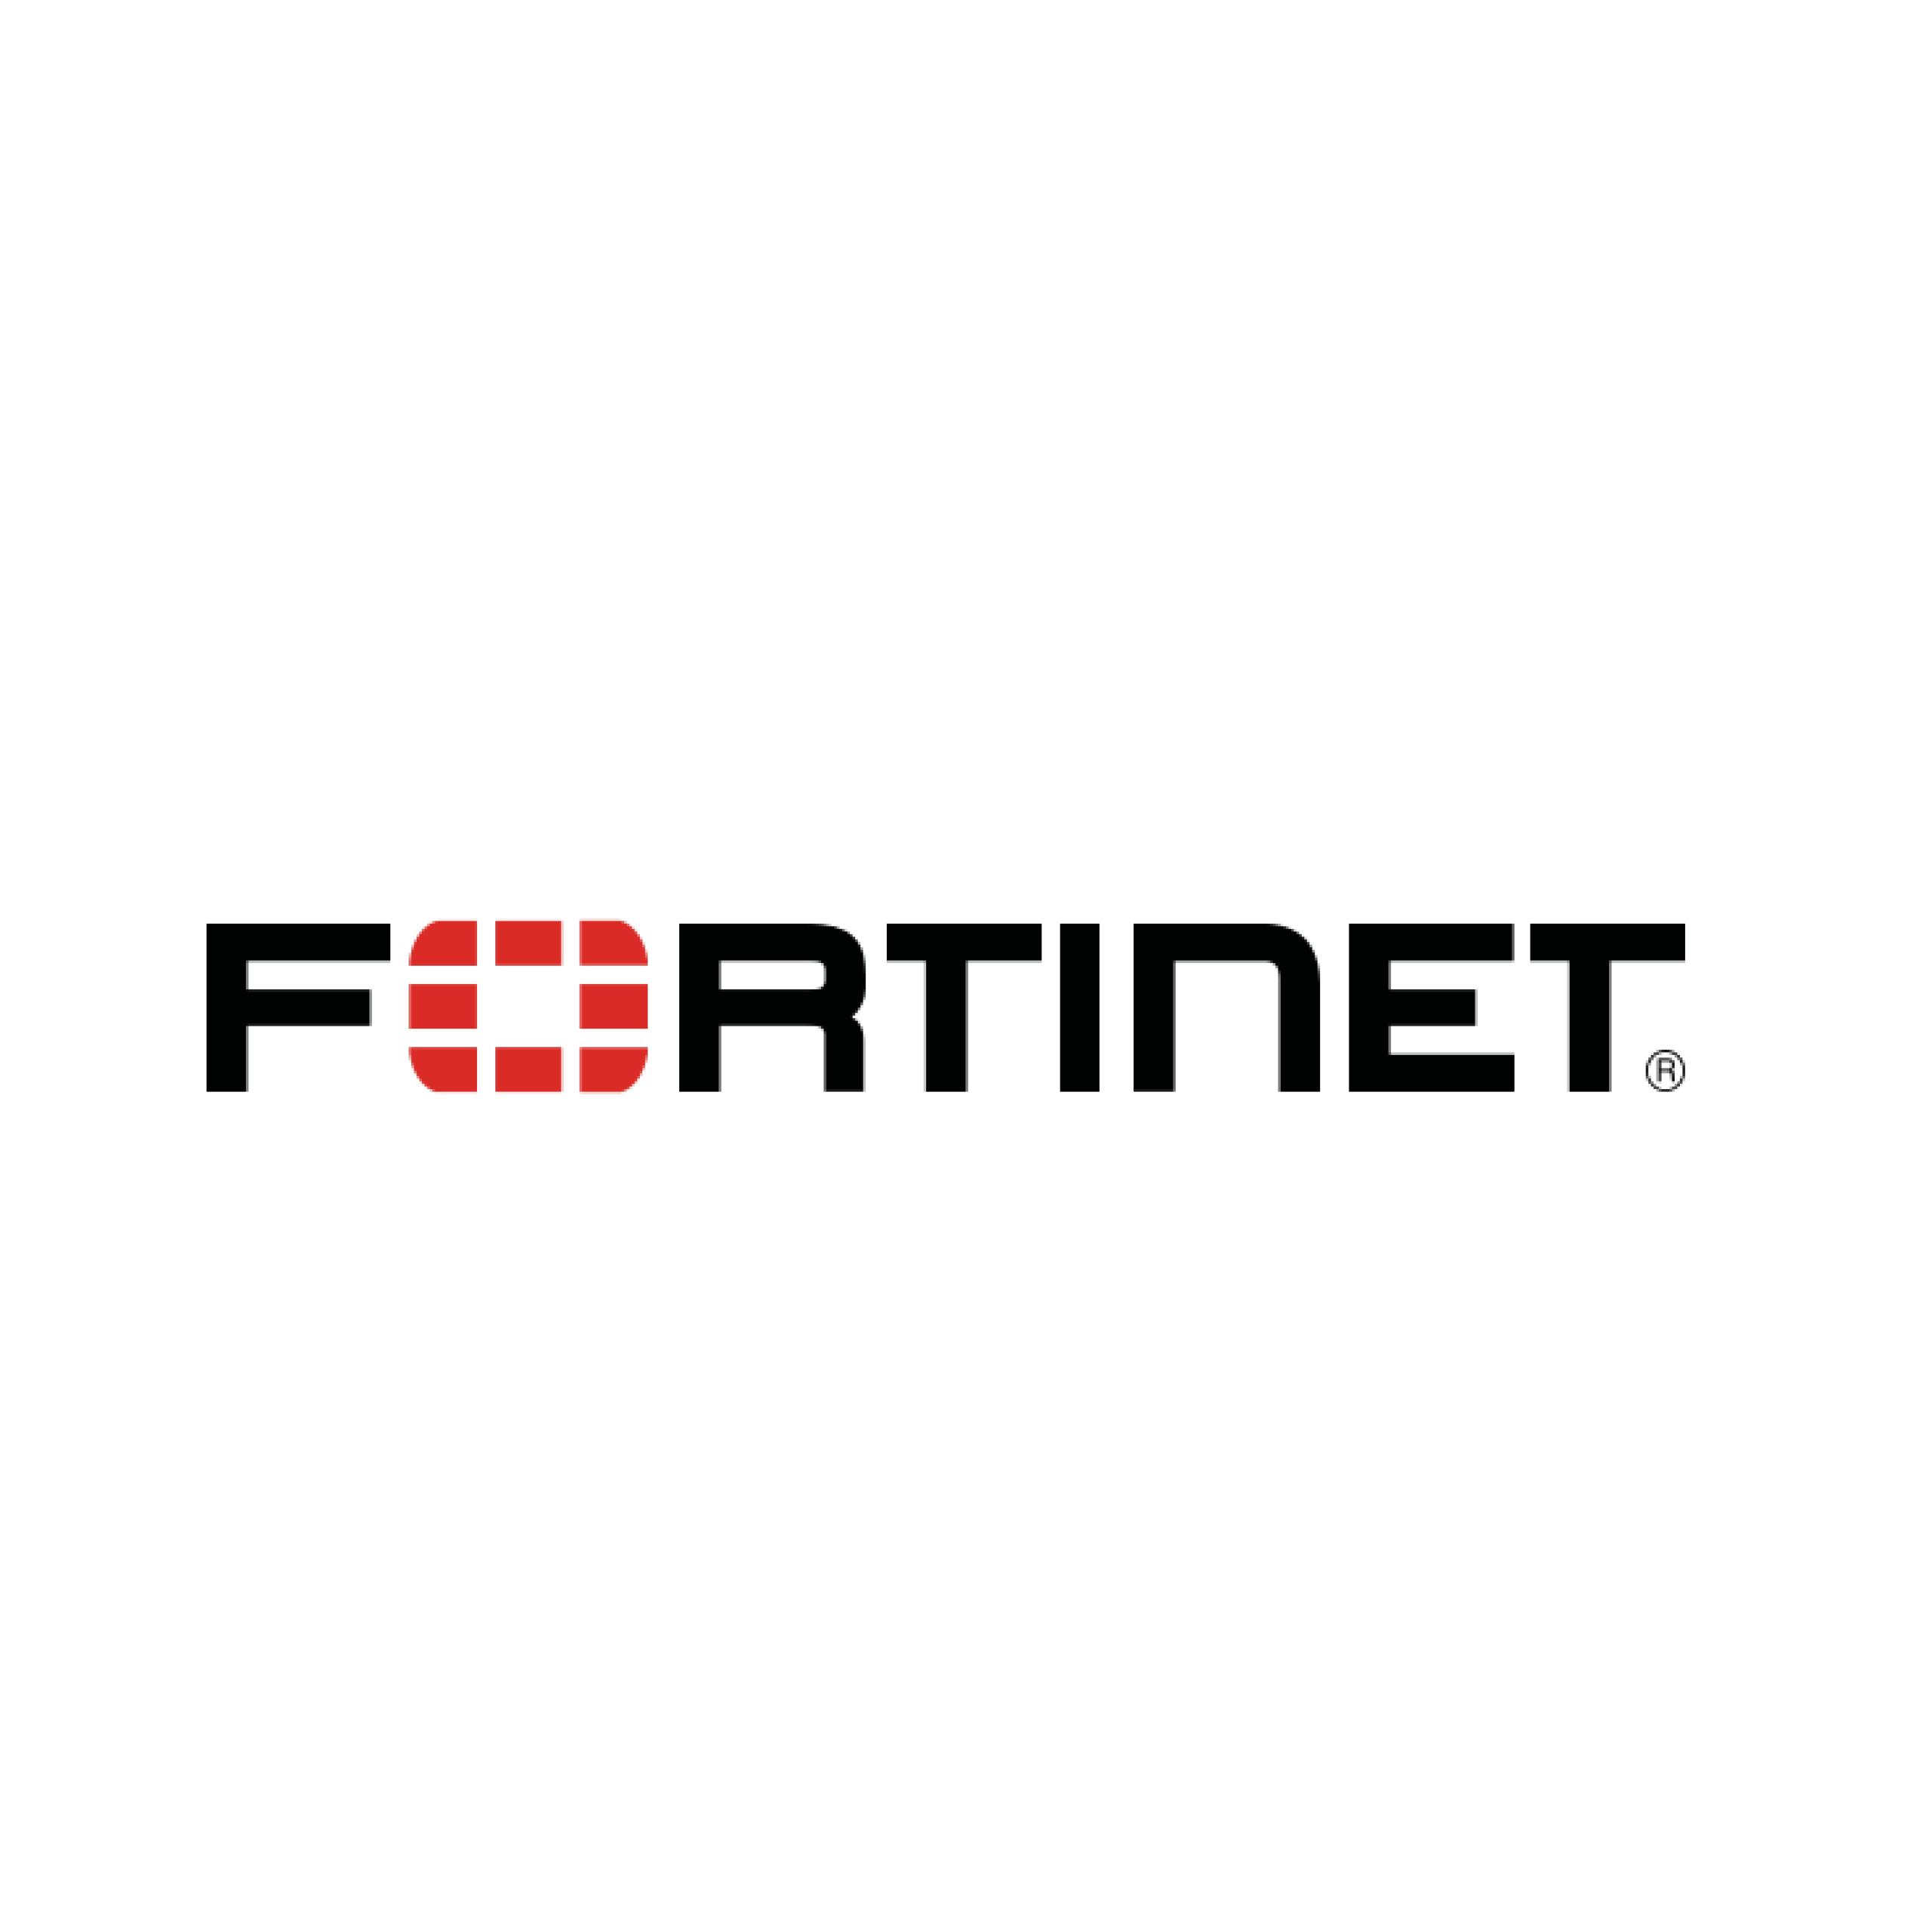 fortinet | Industrial Cybersec Forum,